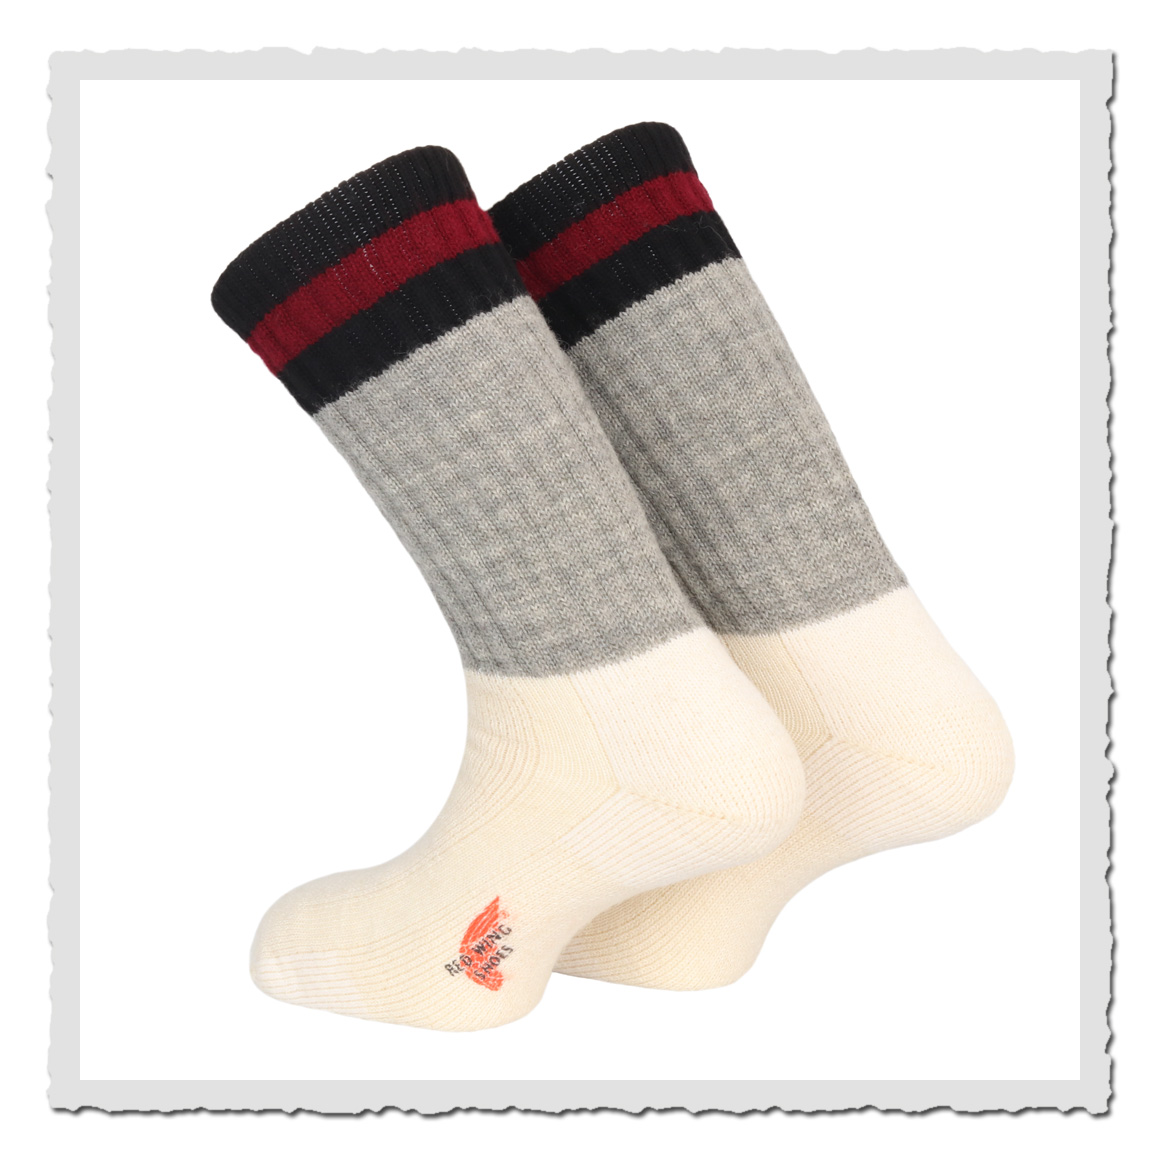 Artic Wool Sock 97160